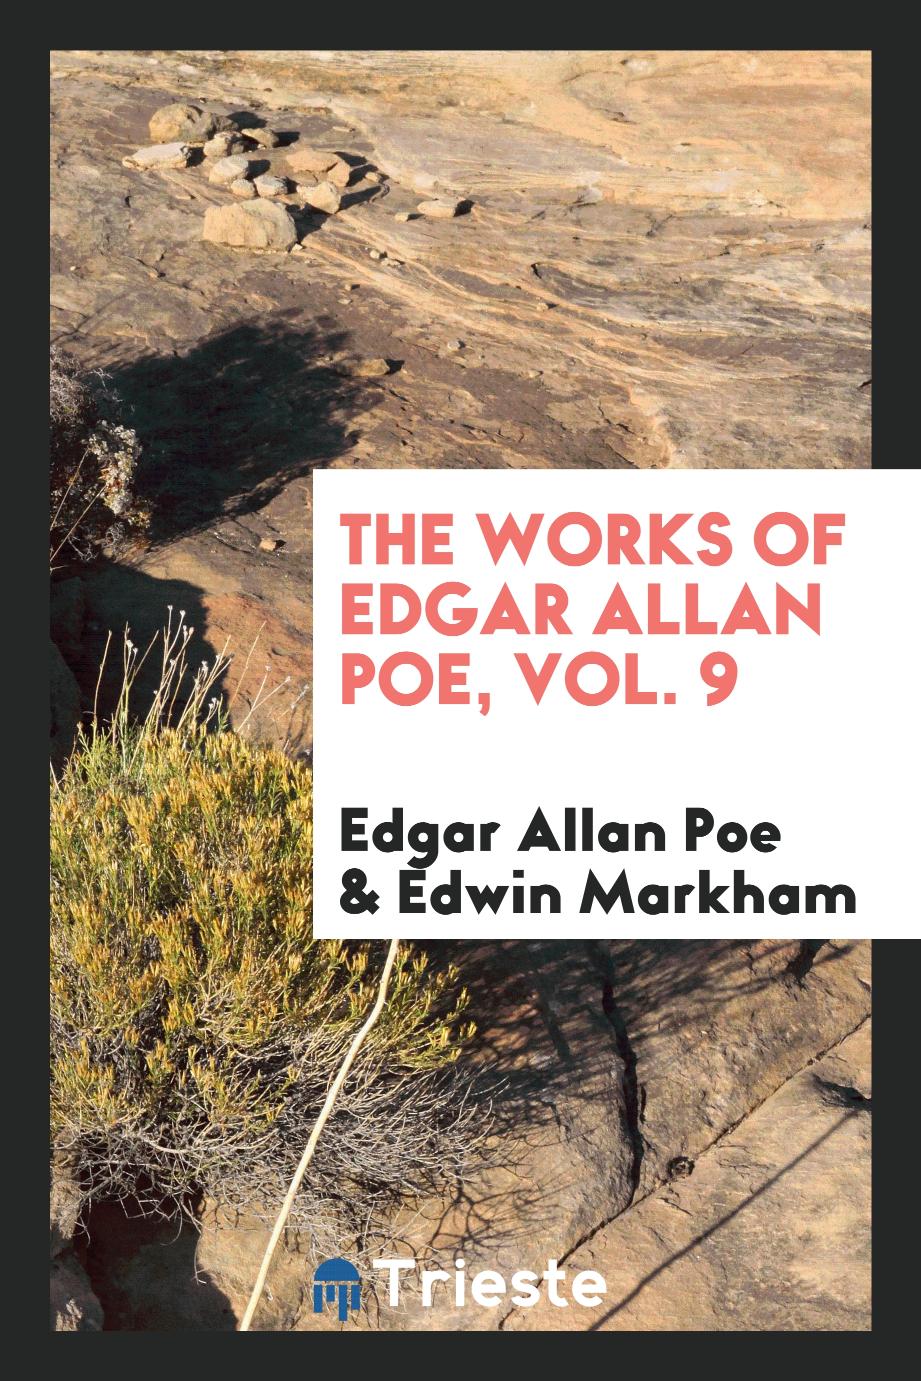 The works of Edgar Allan Poe, Vol. 9